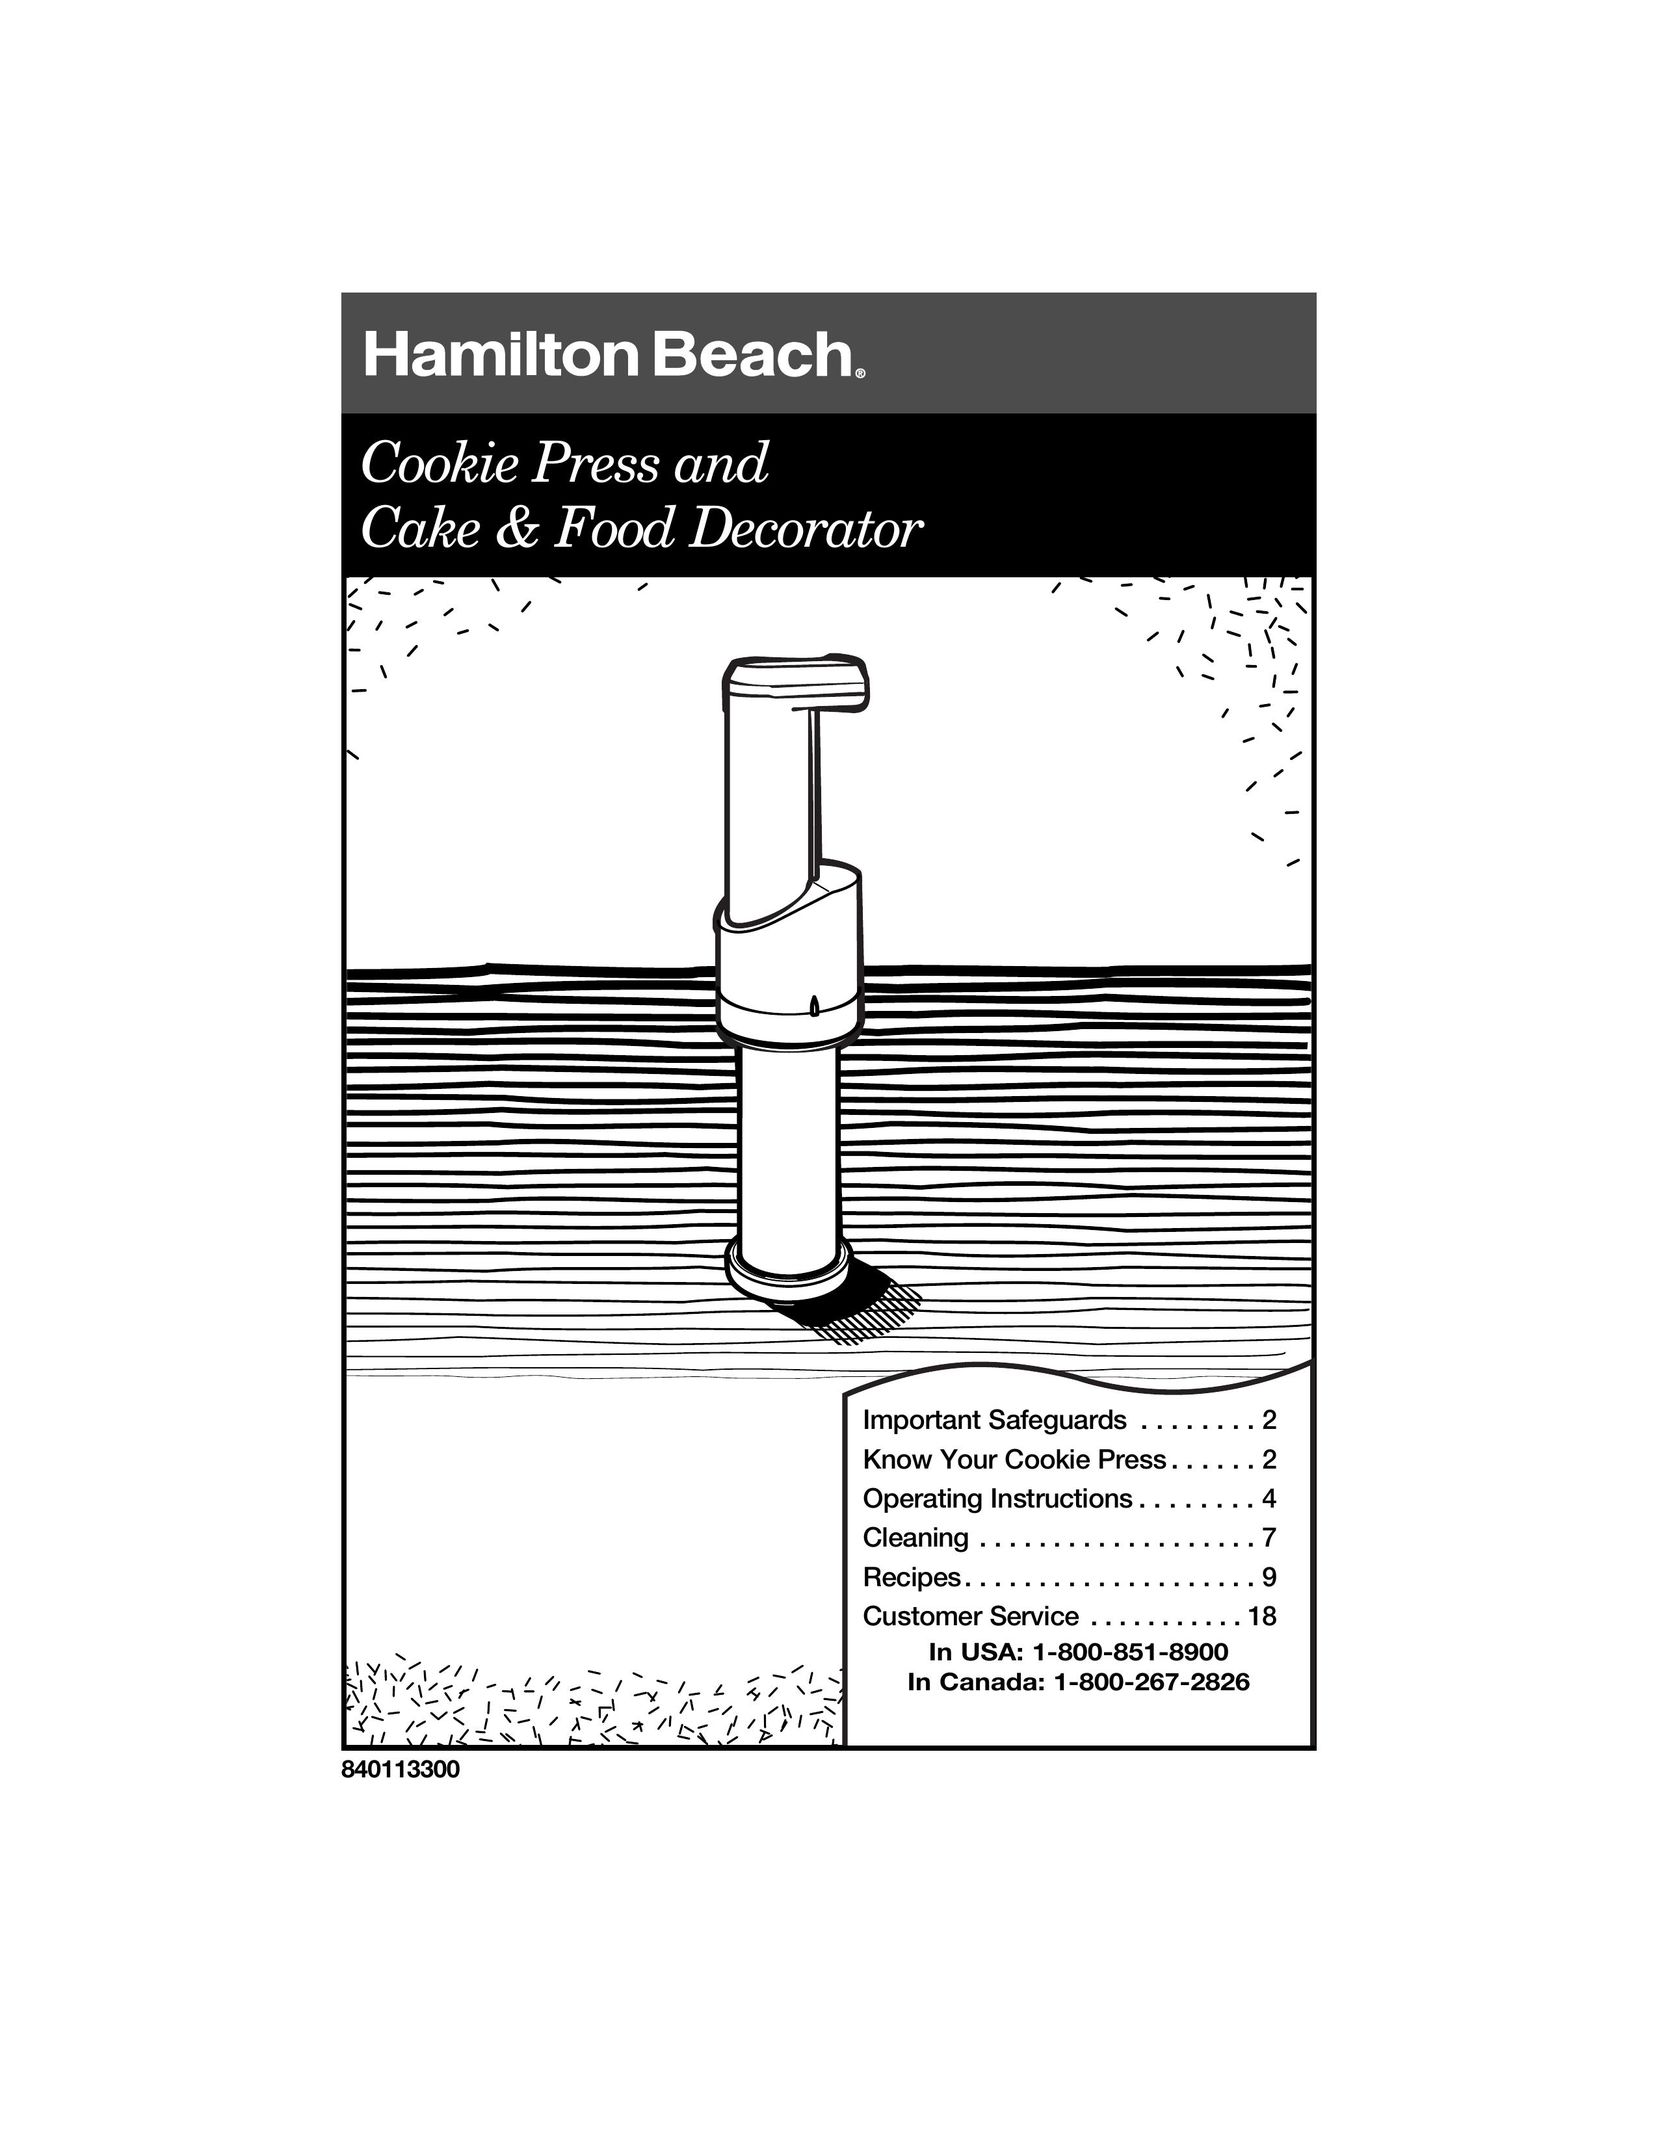 Hamilton Beach Cookie Press and Cake & Food Decorator Cookware User Manual